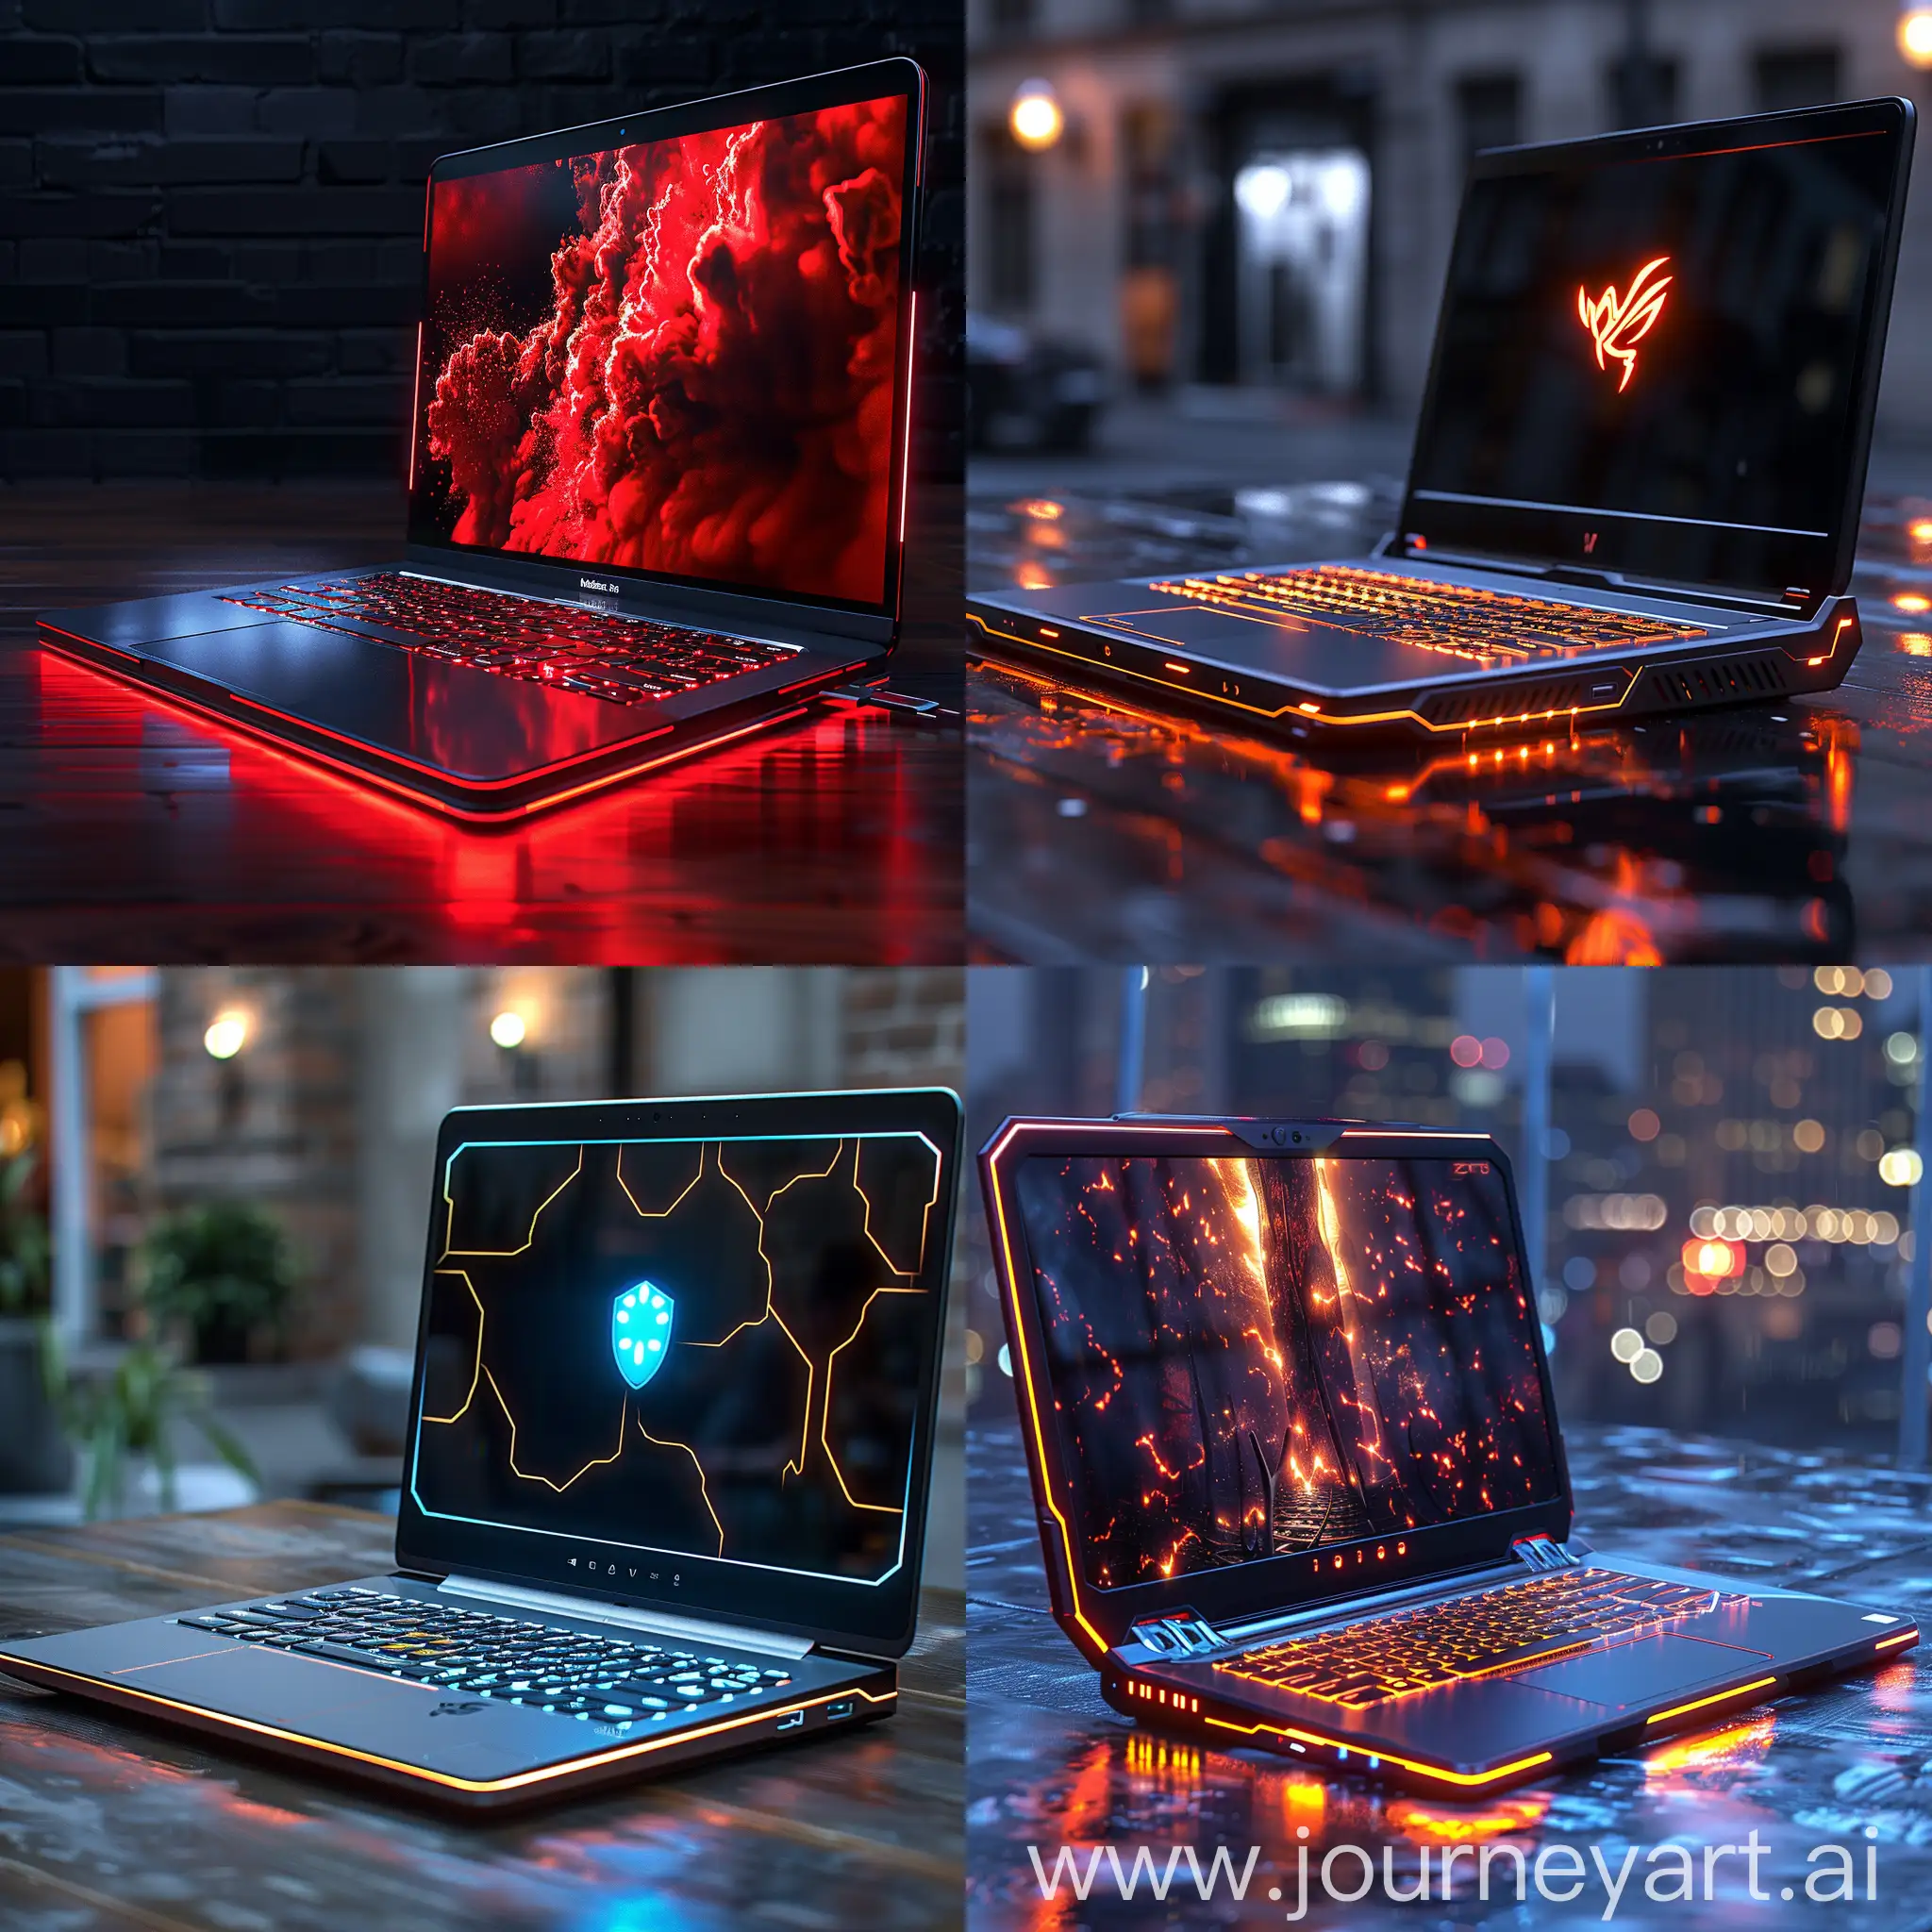 Futuristic-UltraModern-Laptop-Concept